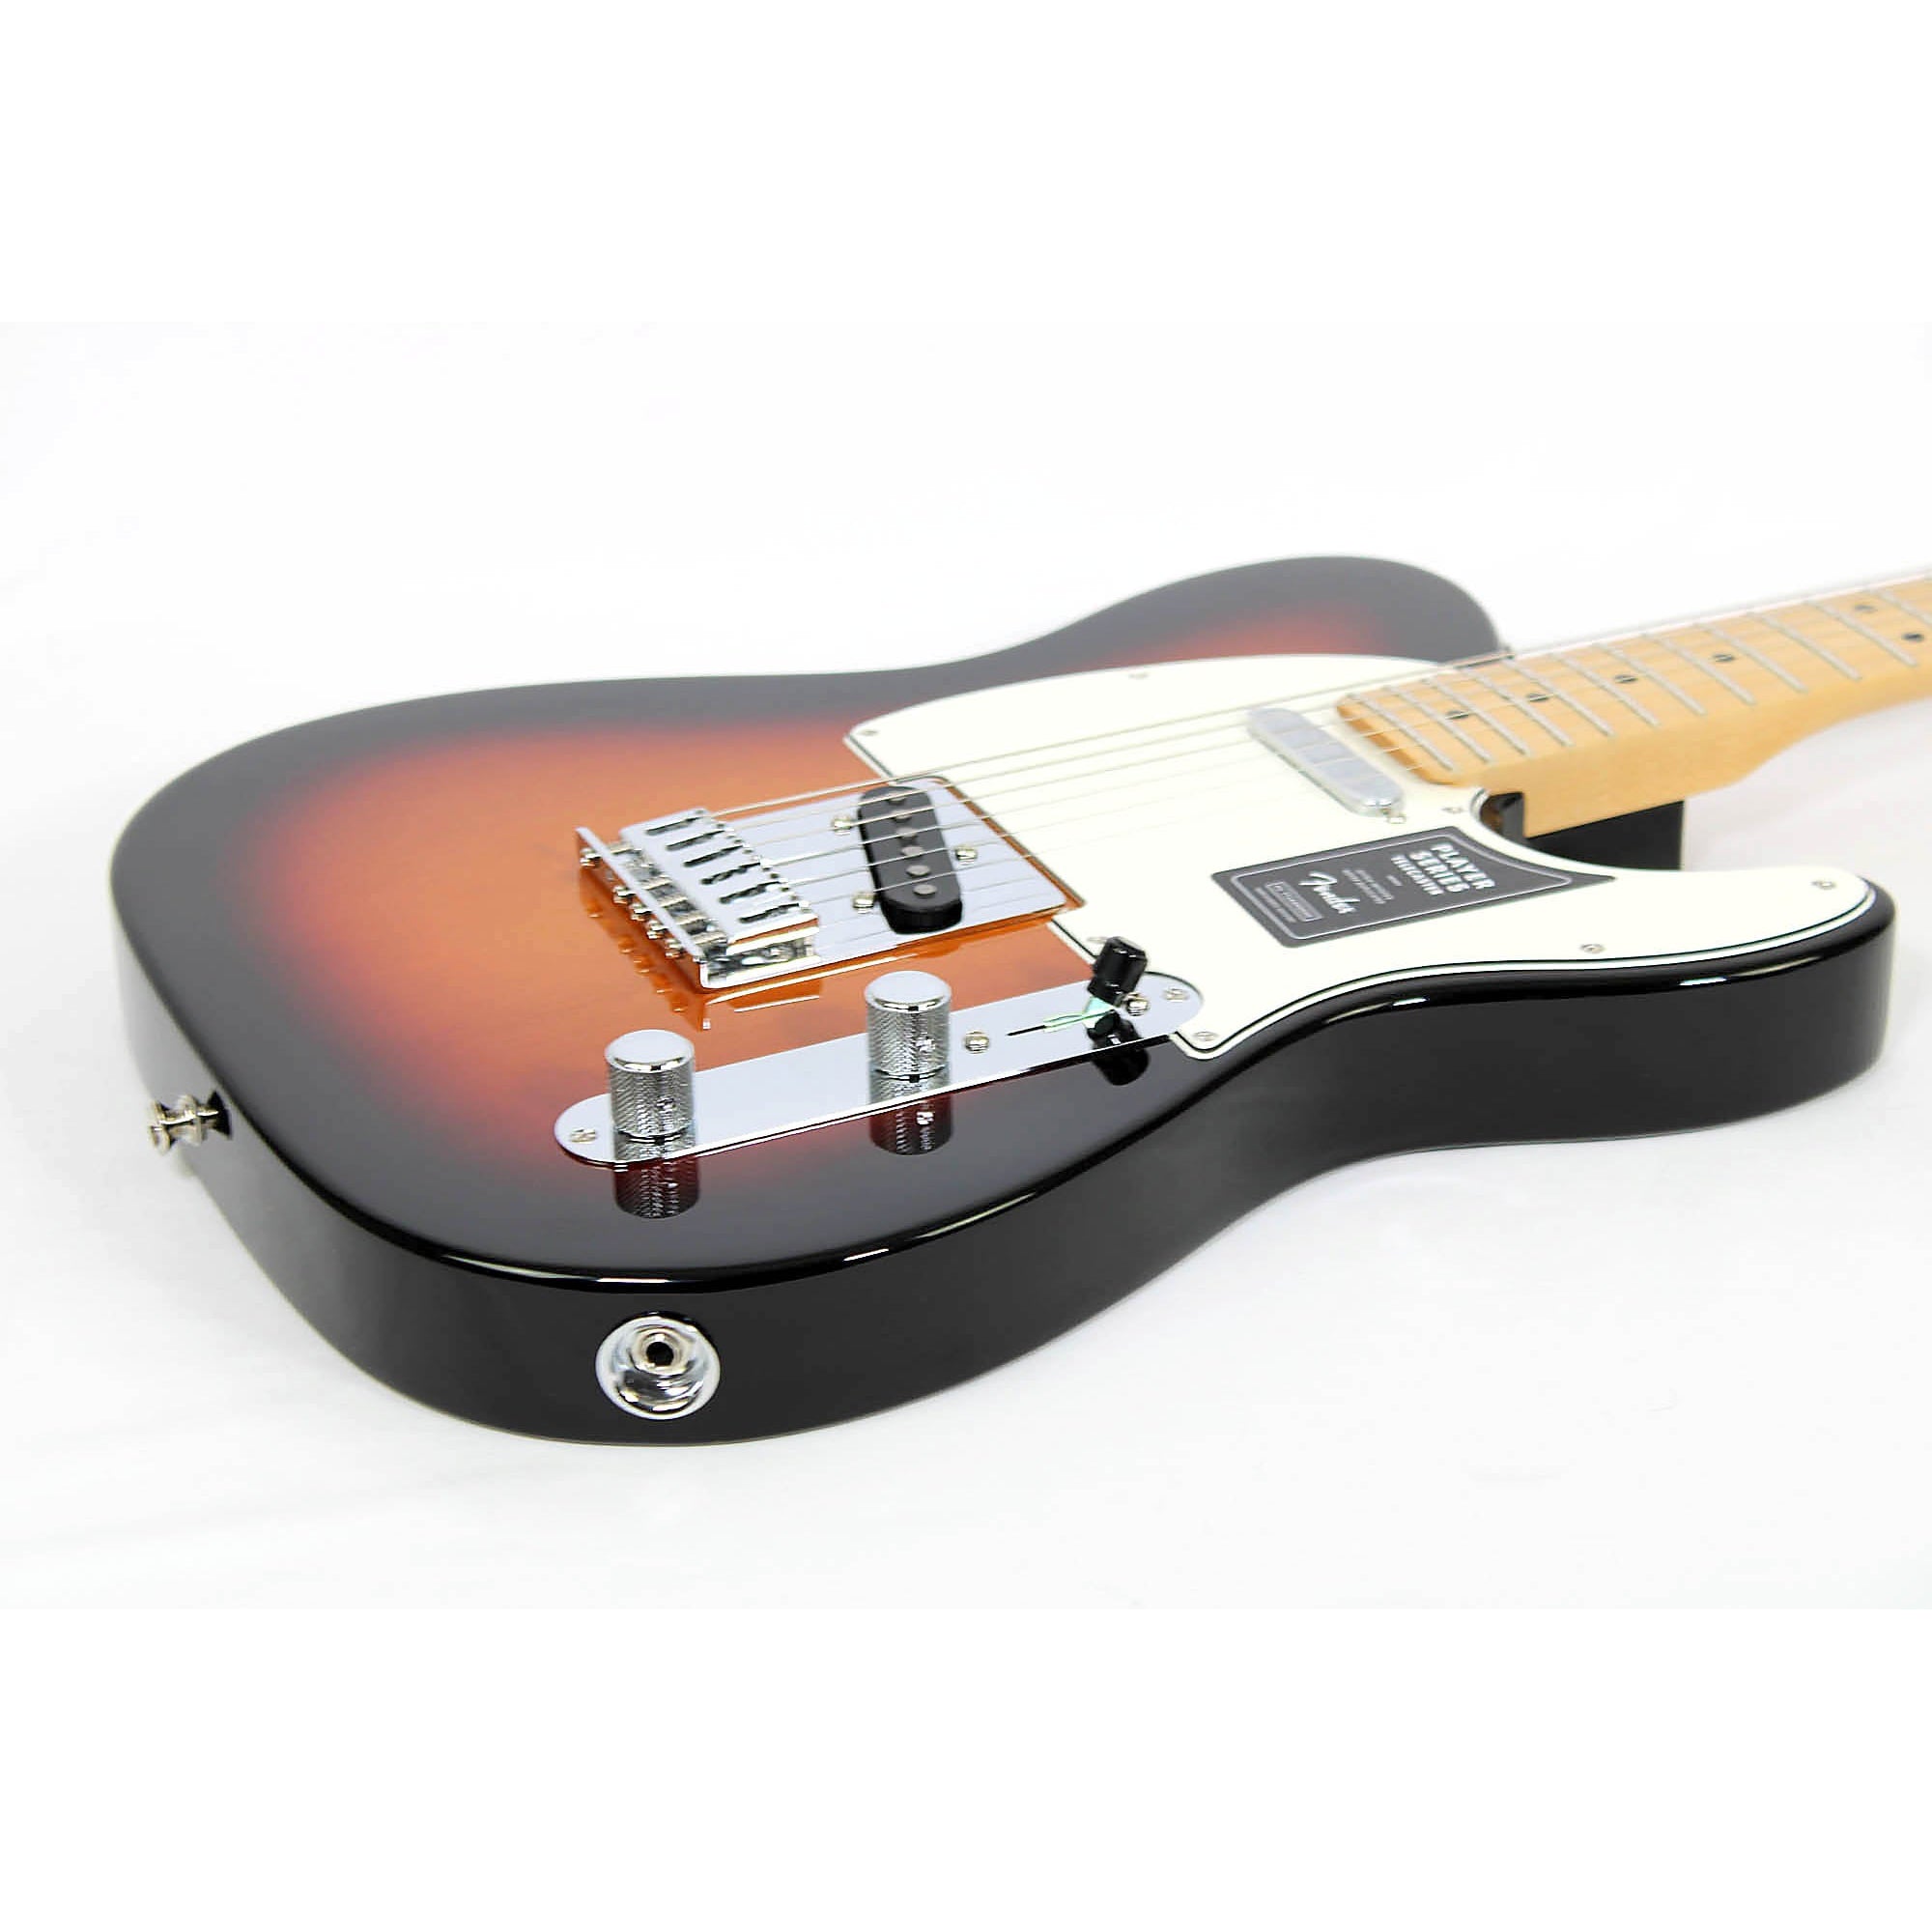 Fender Player Series Telecaster - 3 Tone Sunburst with Maple 